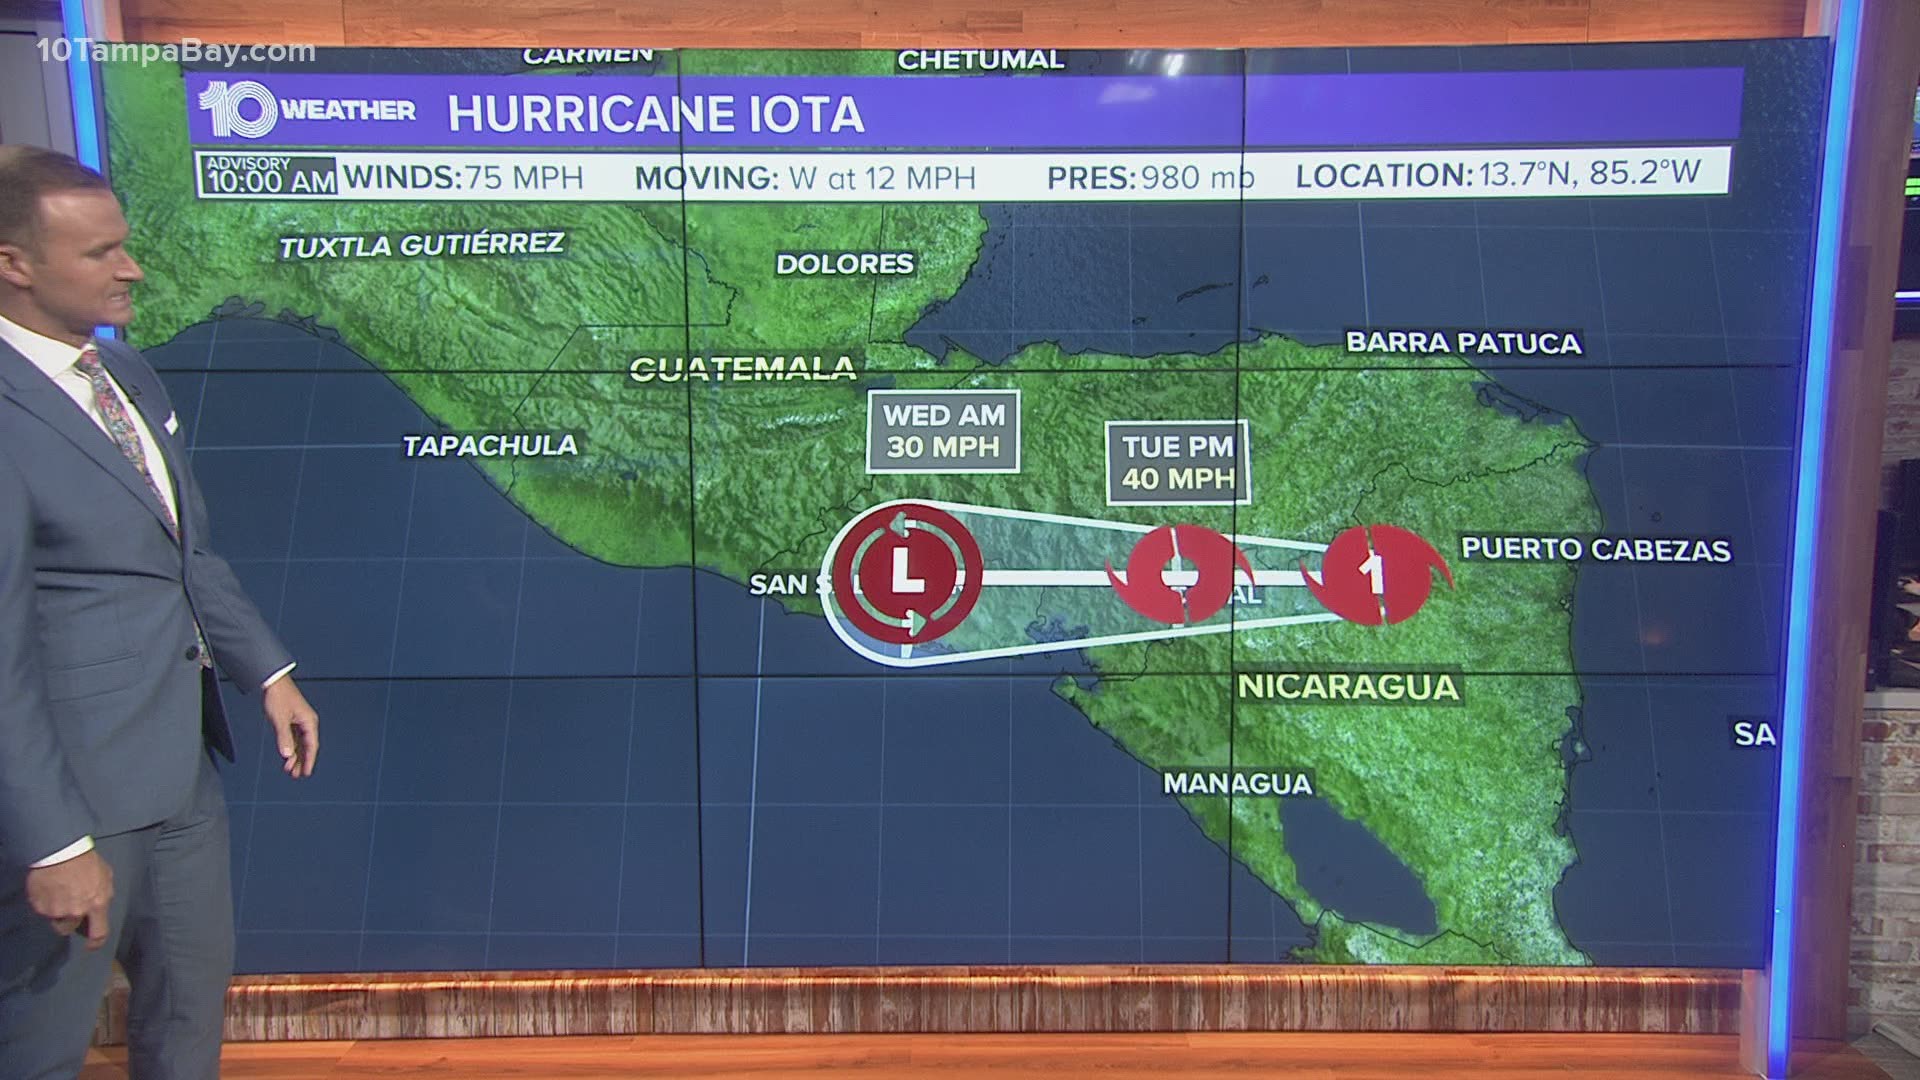 Hurricane Iota made landfall Monday night in Nicaragua as a Category 4 hurricane.